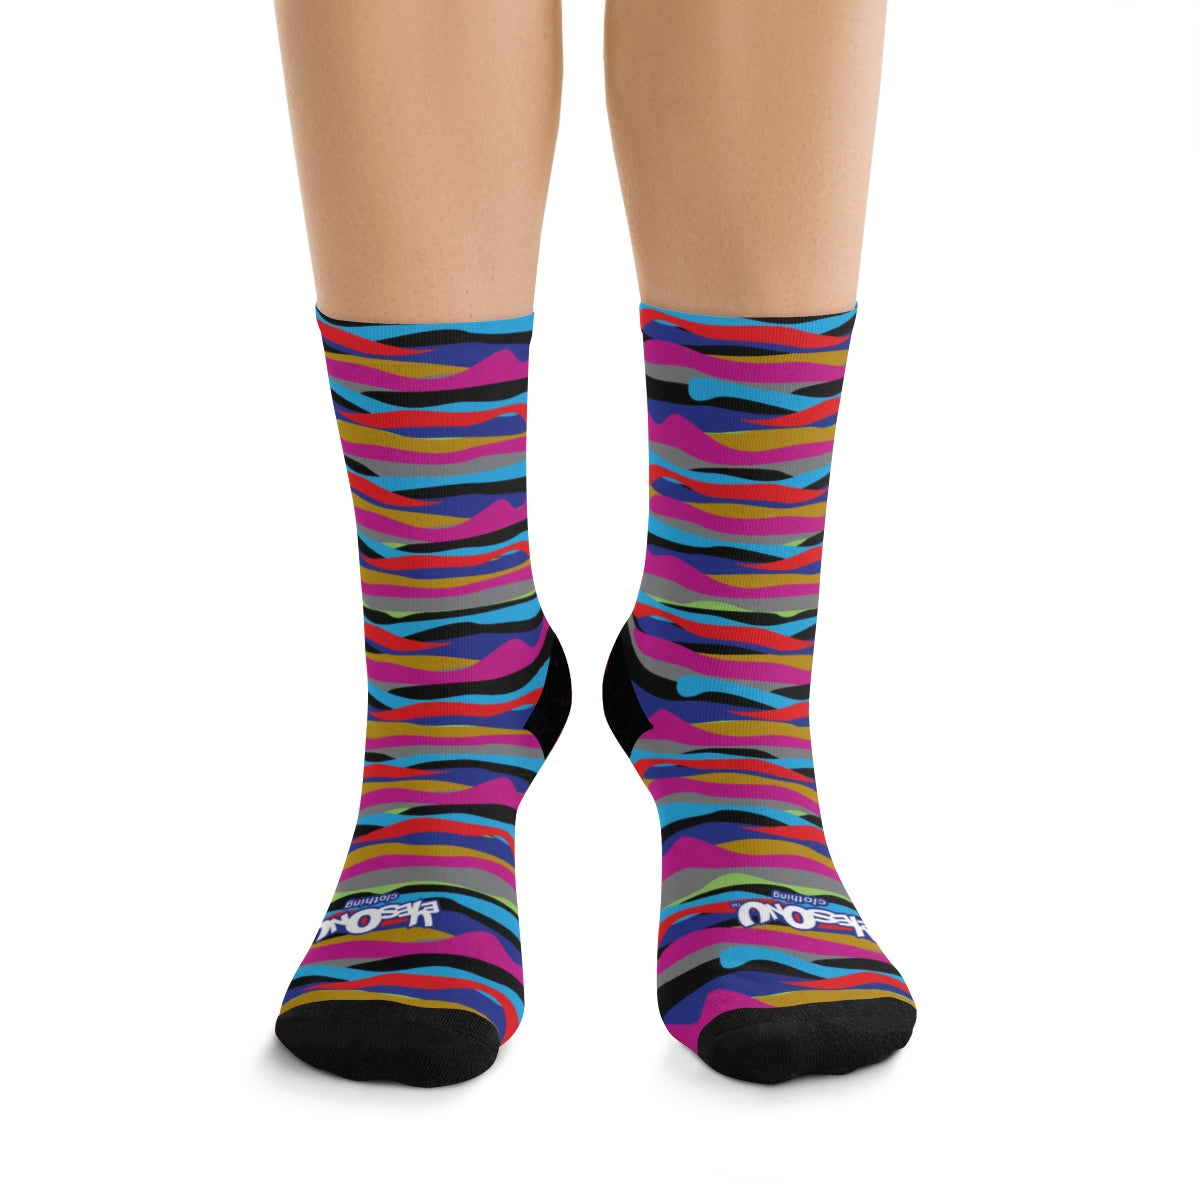 EOYC GiG Pattern Socks